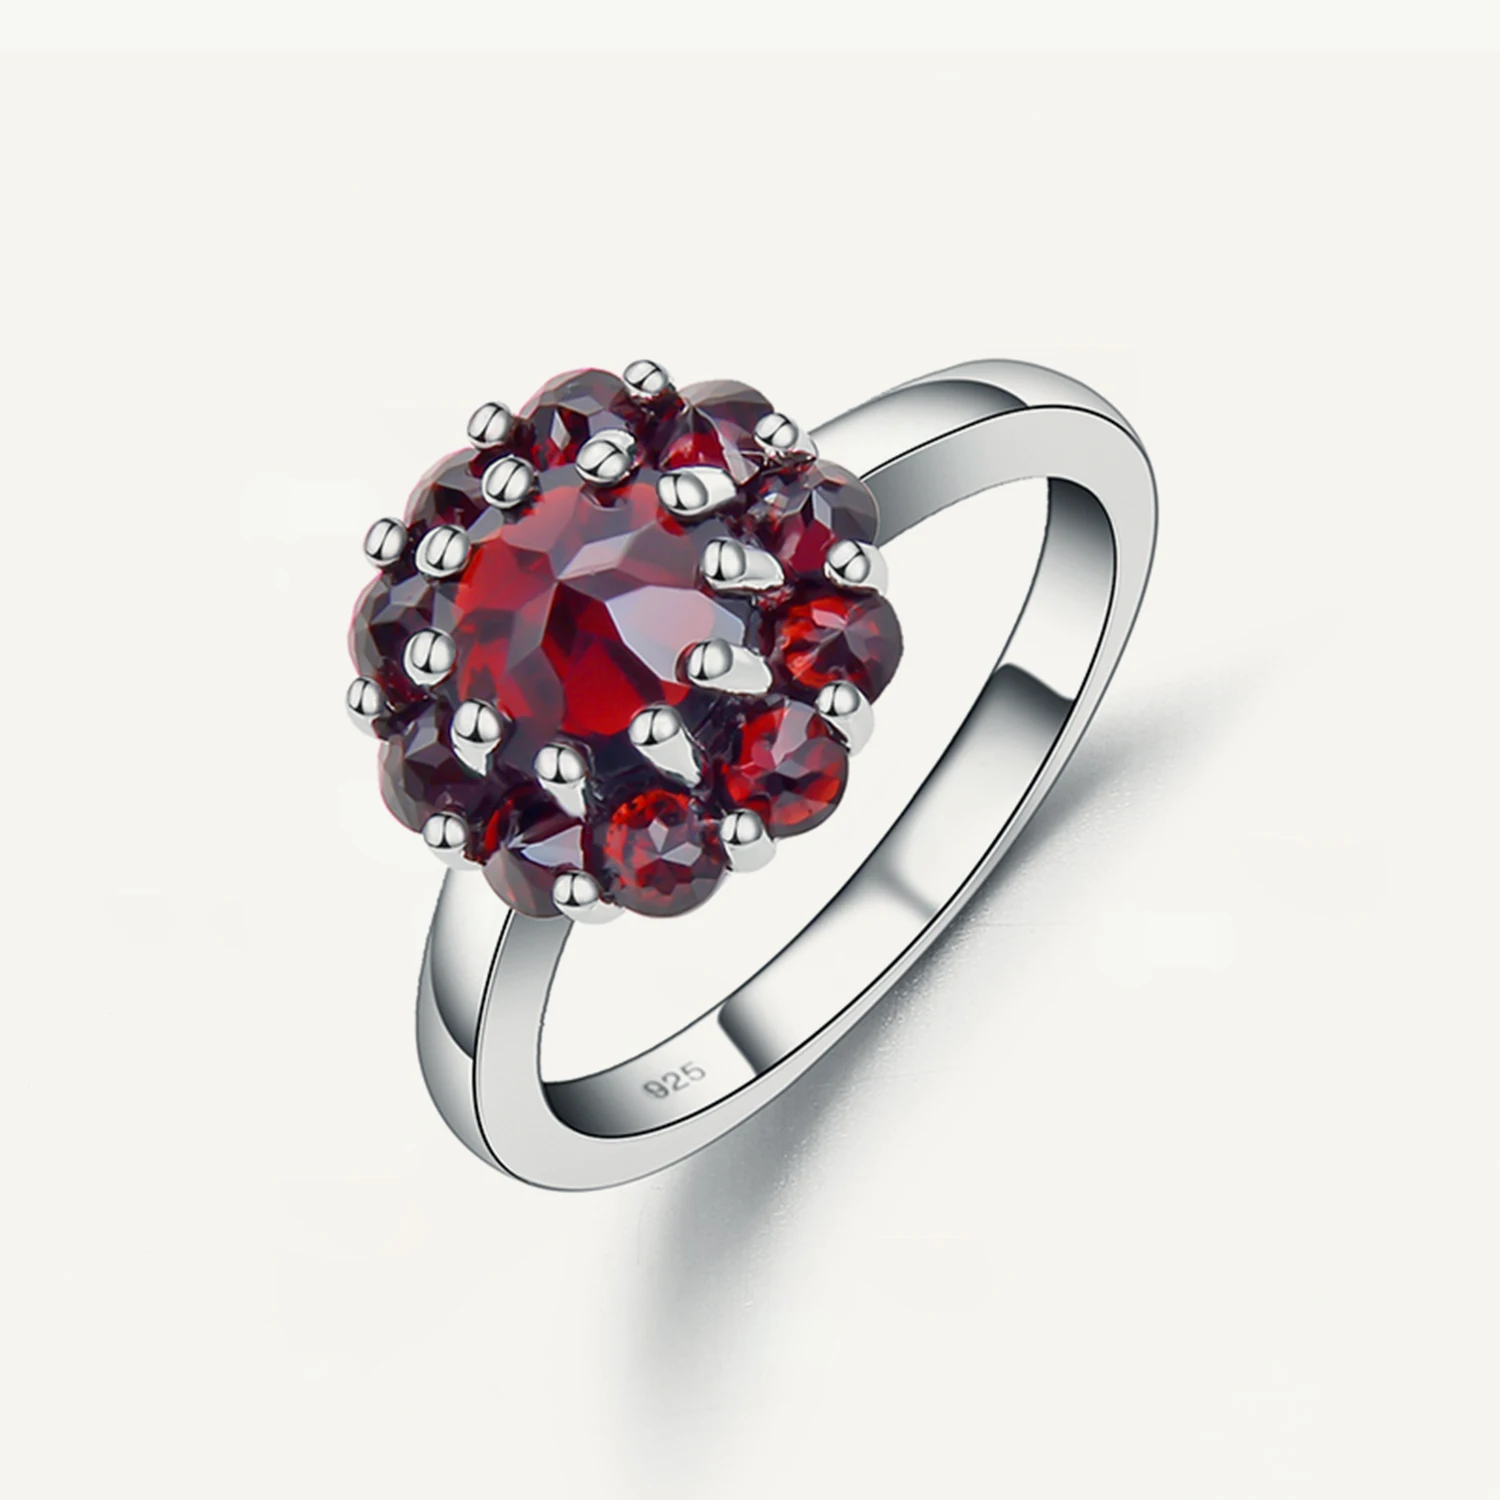 

GEM'S BALLET 925 Sterling Silver Gemstone Cluster Ring 6mm Natural Black Garnet Engagement Rings For Women Wedding Fine Jewelry